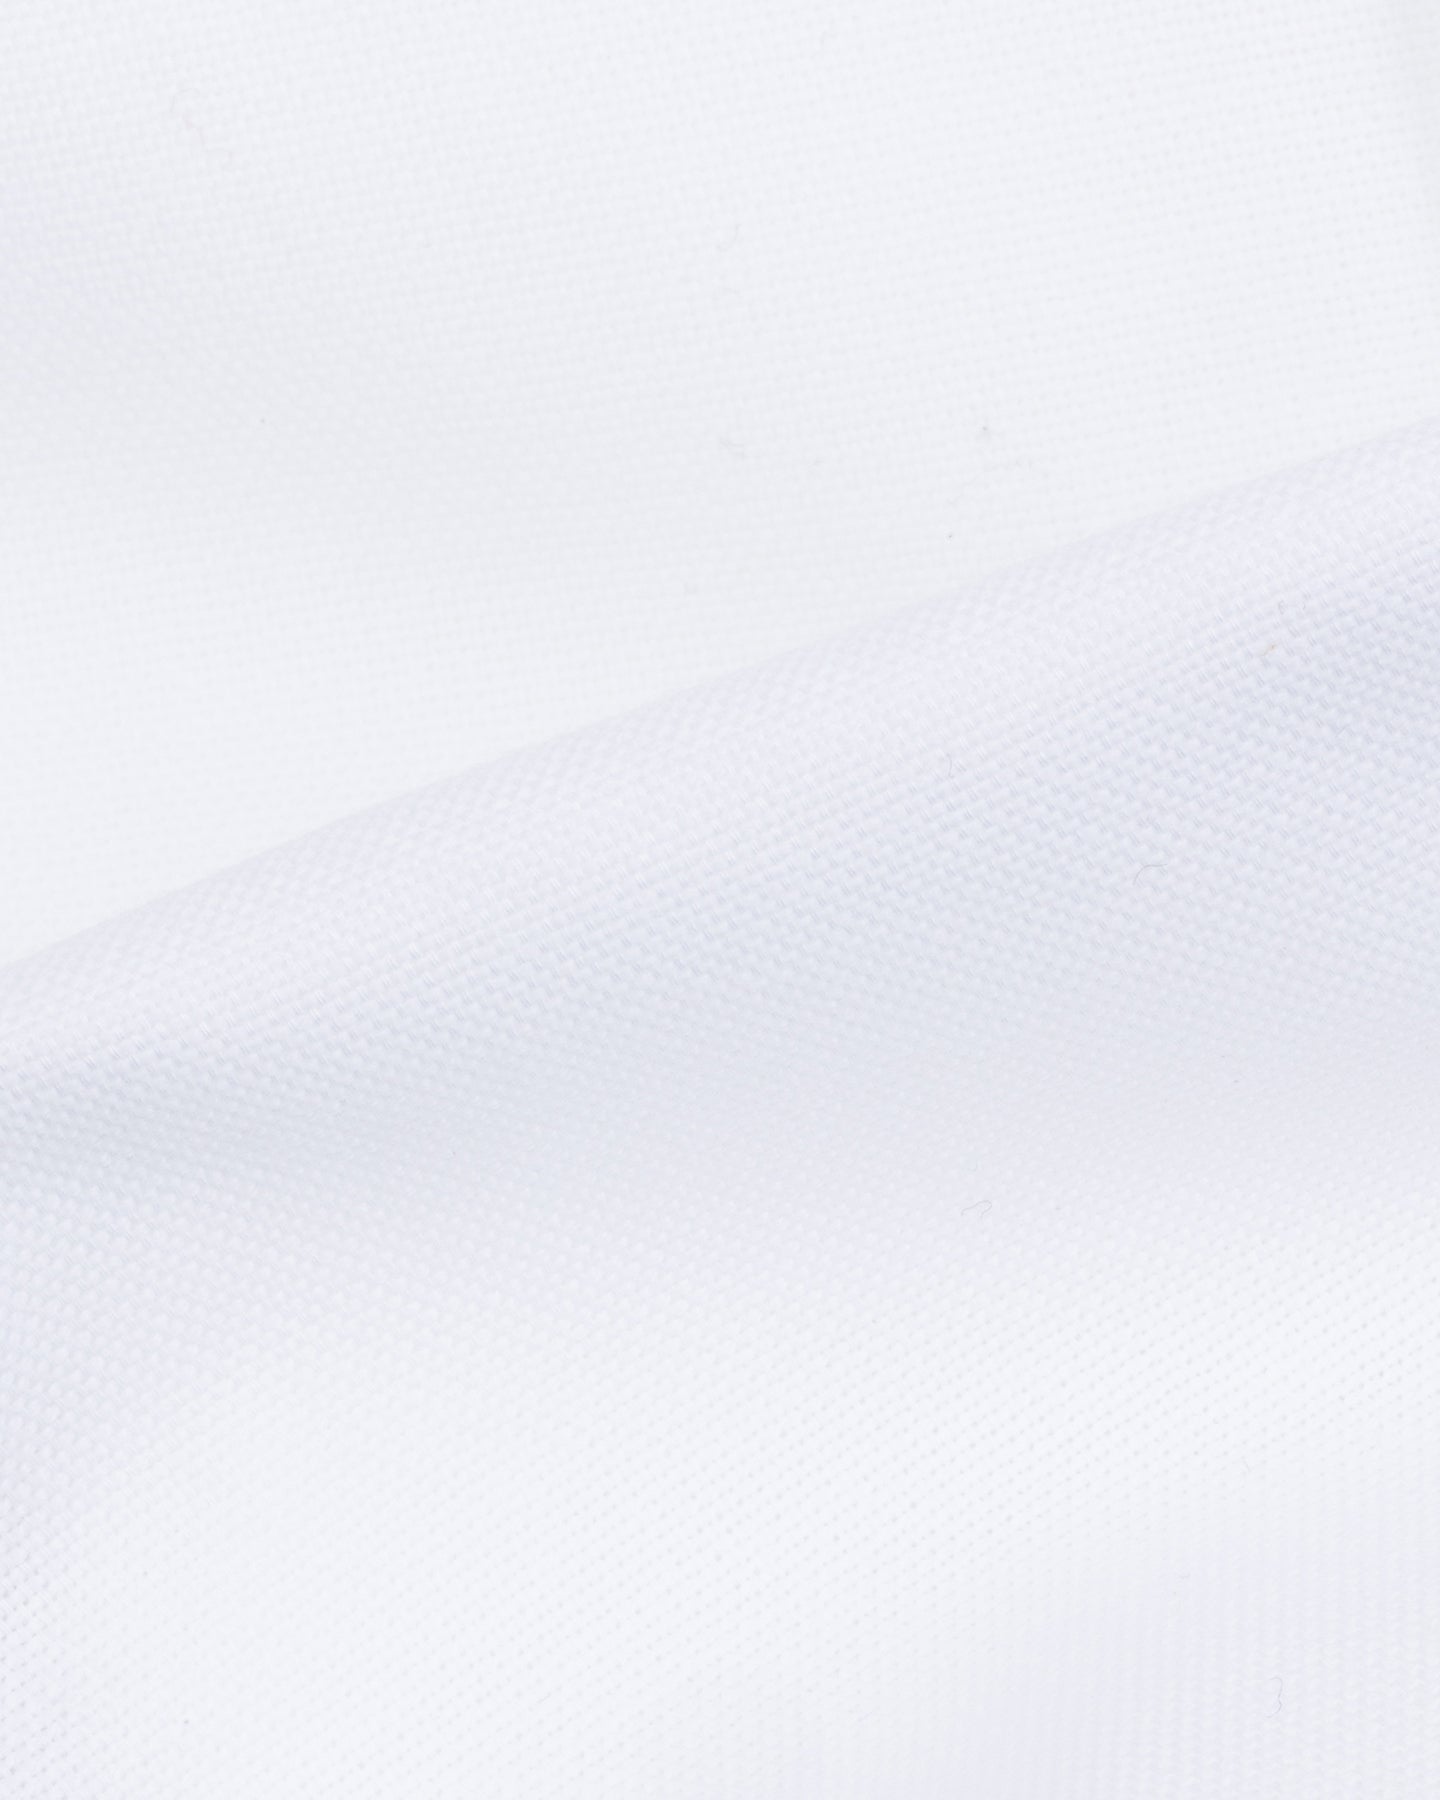 White oxford cloth shirt fabric